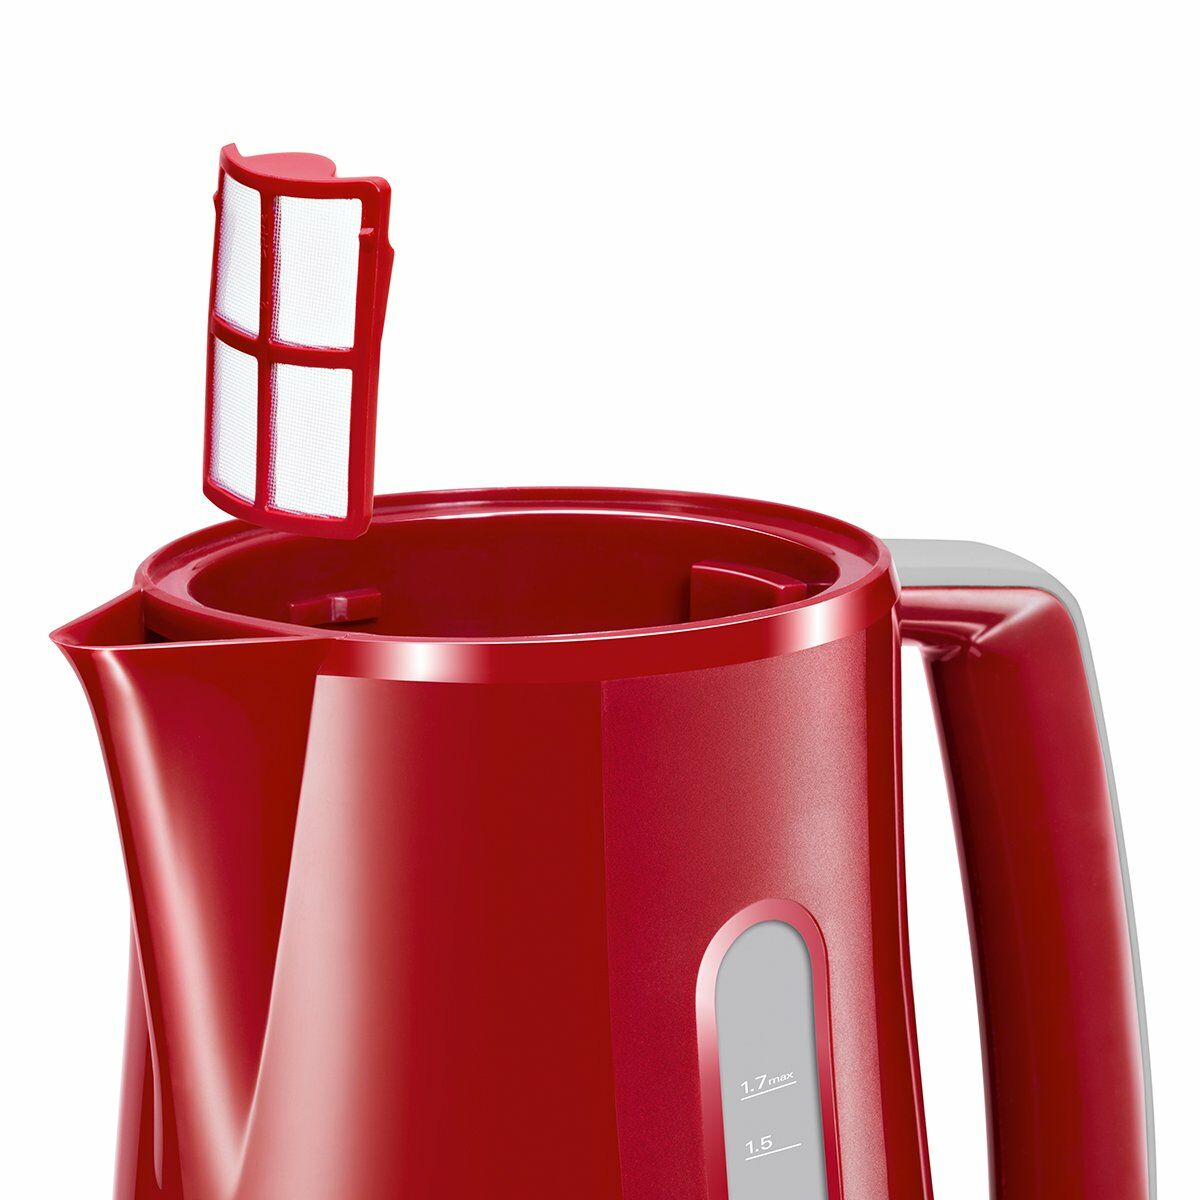 Kaufe Wasserkocher BOSCH TWK3A014 Rot Ja Edelstahl Kunststoff Kunststoff/Edelstahl 2400 W 1,7 L bei AWK Flagship um € 55.00